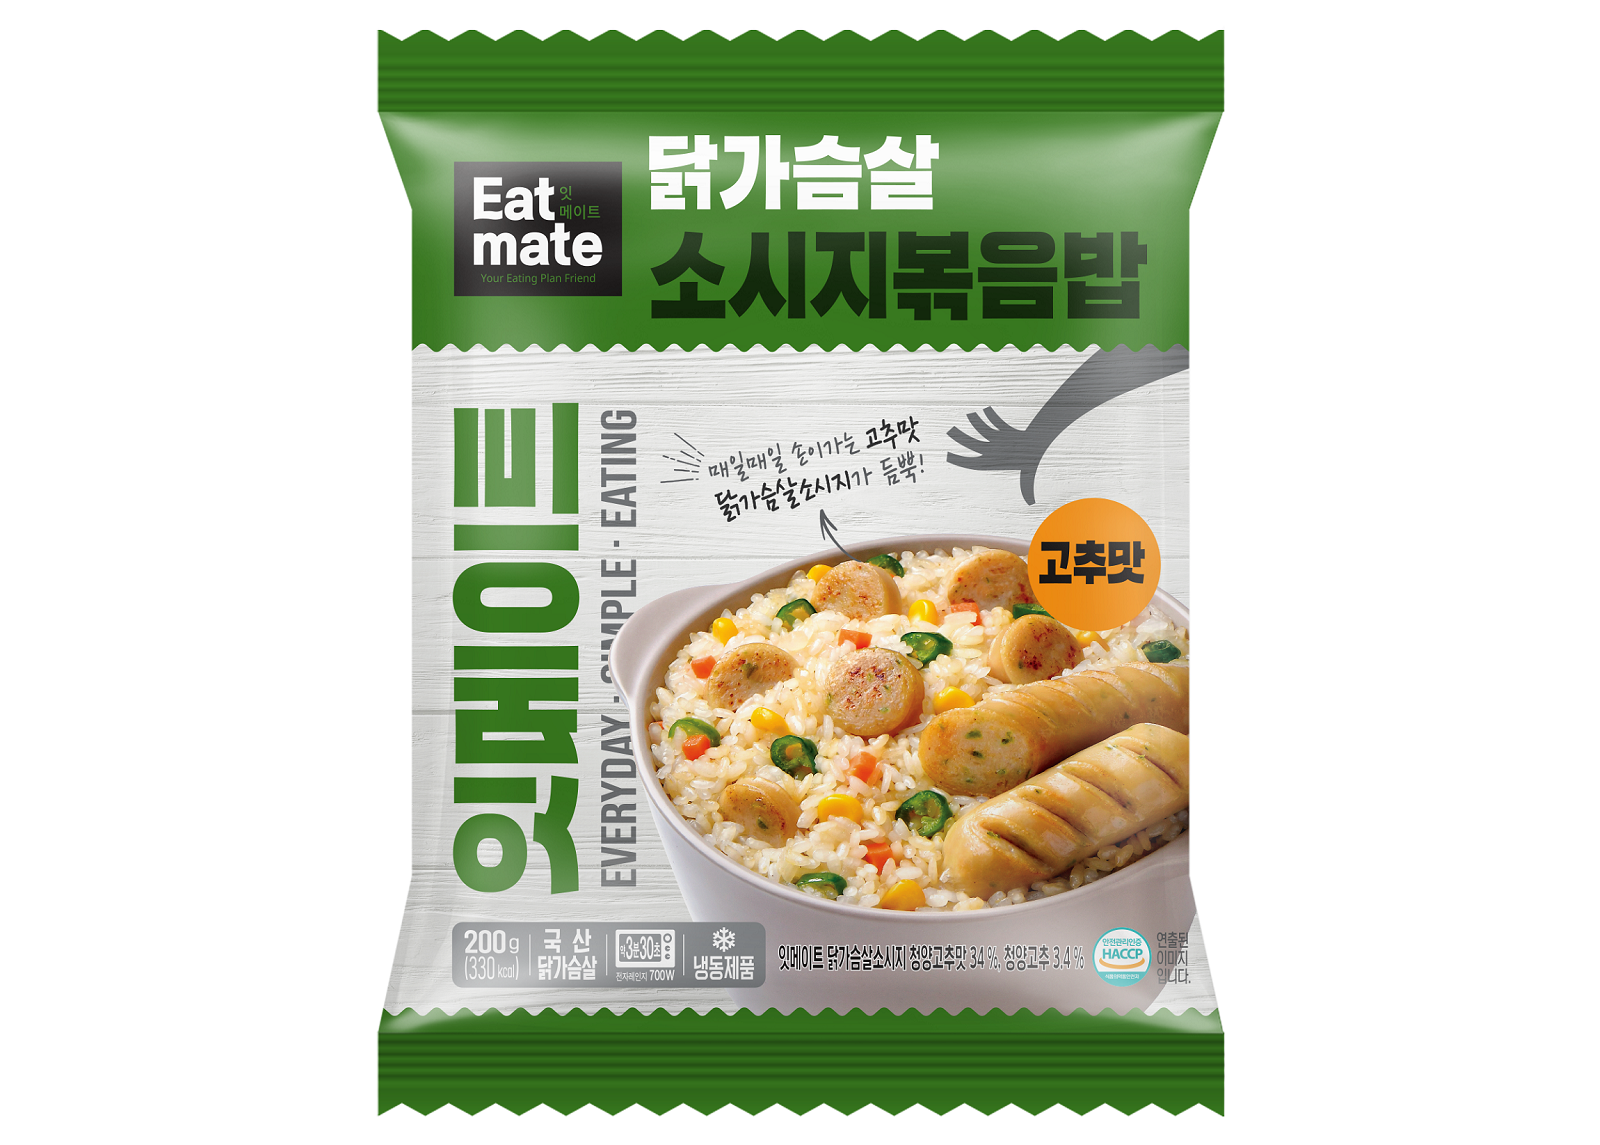 EATMATE 營養炒飯拼雞胸肉腸 (辣味) - RankingDak hong kong